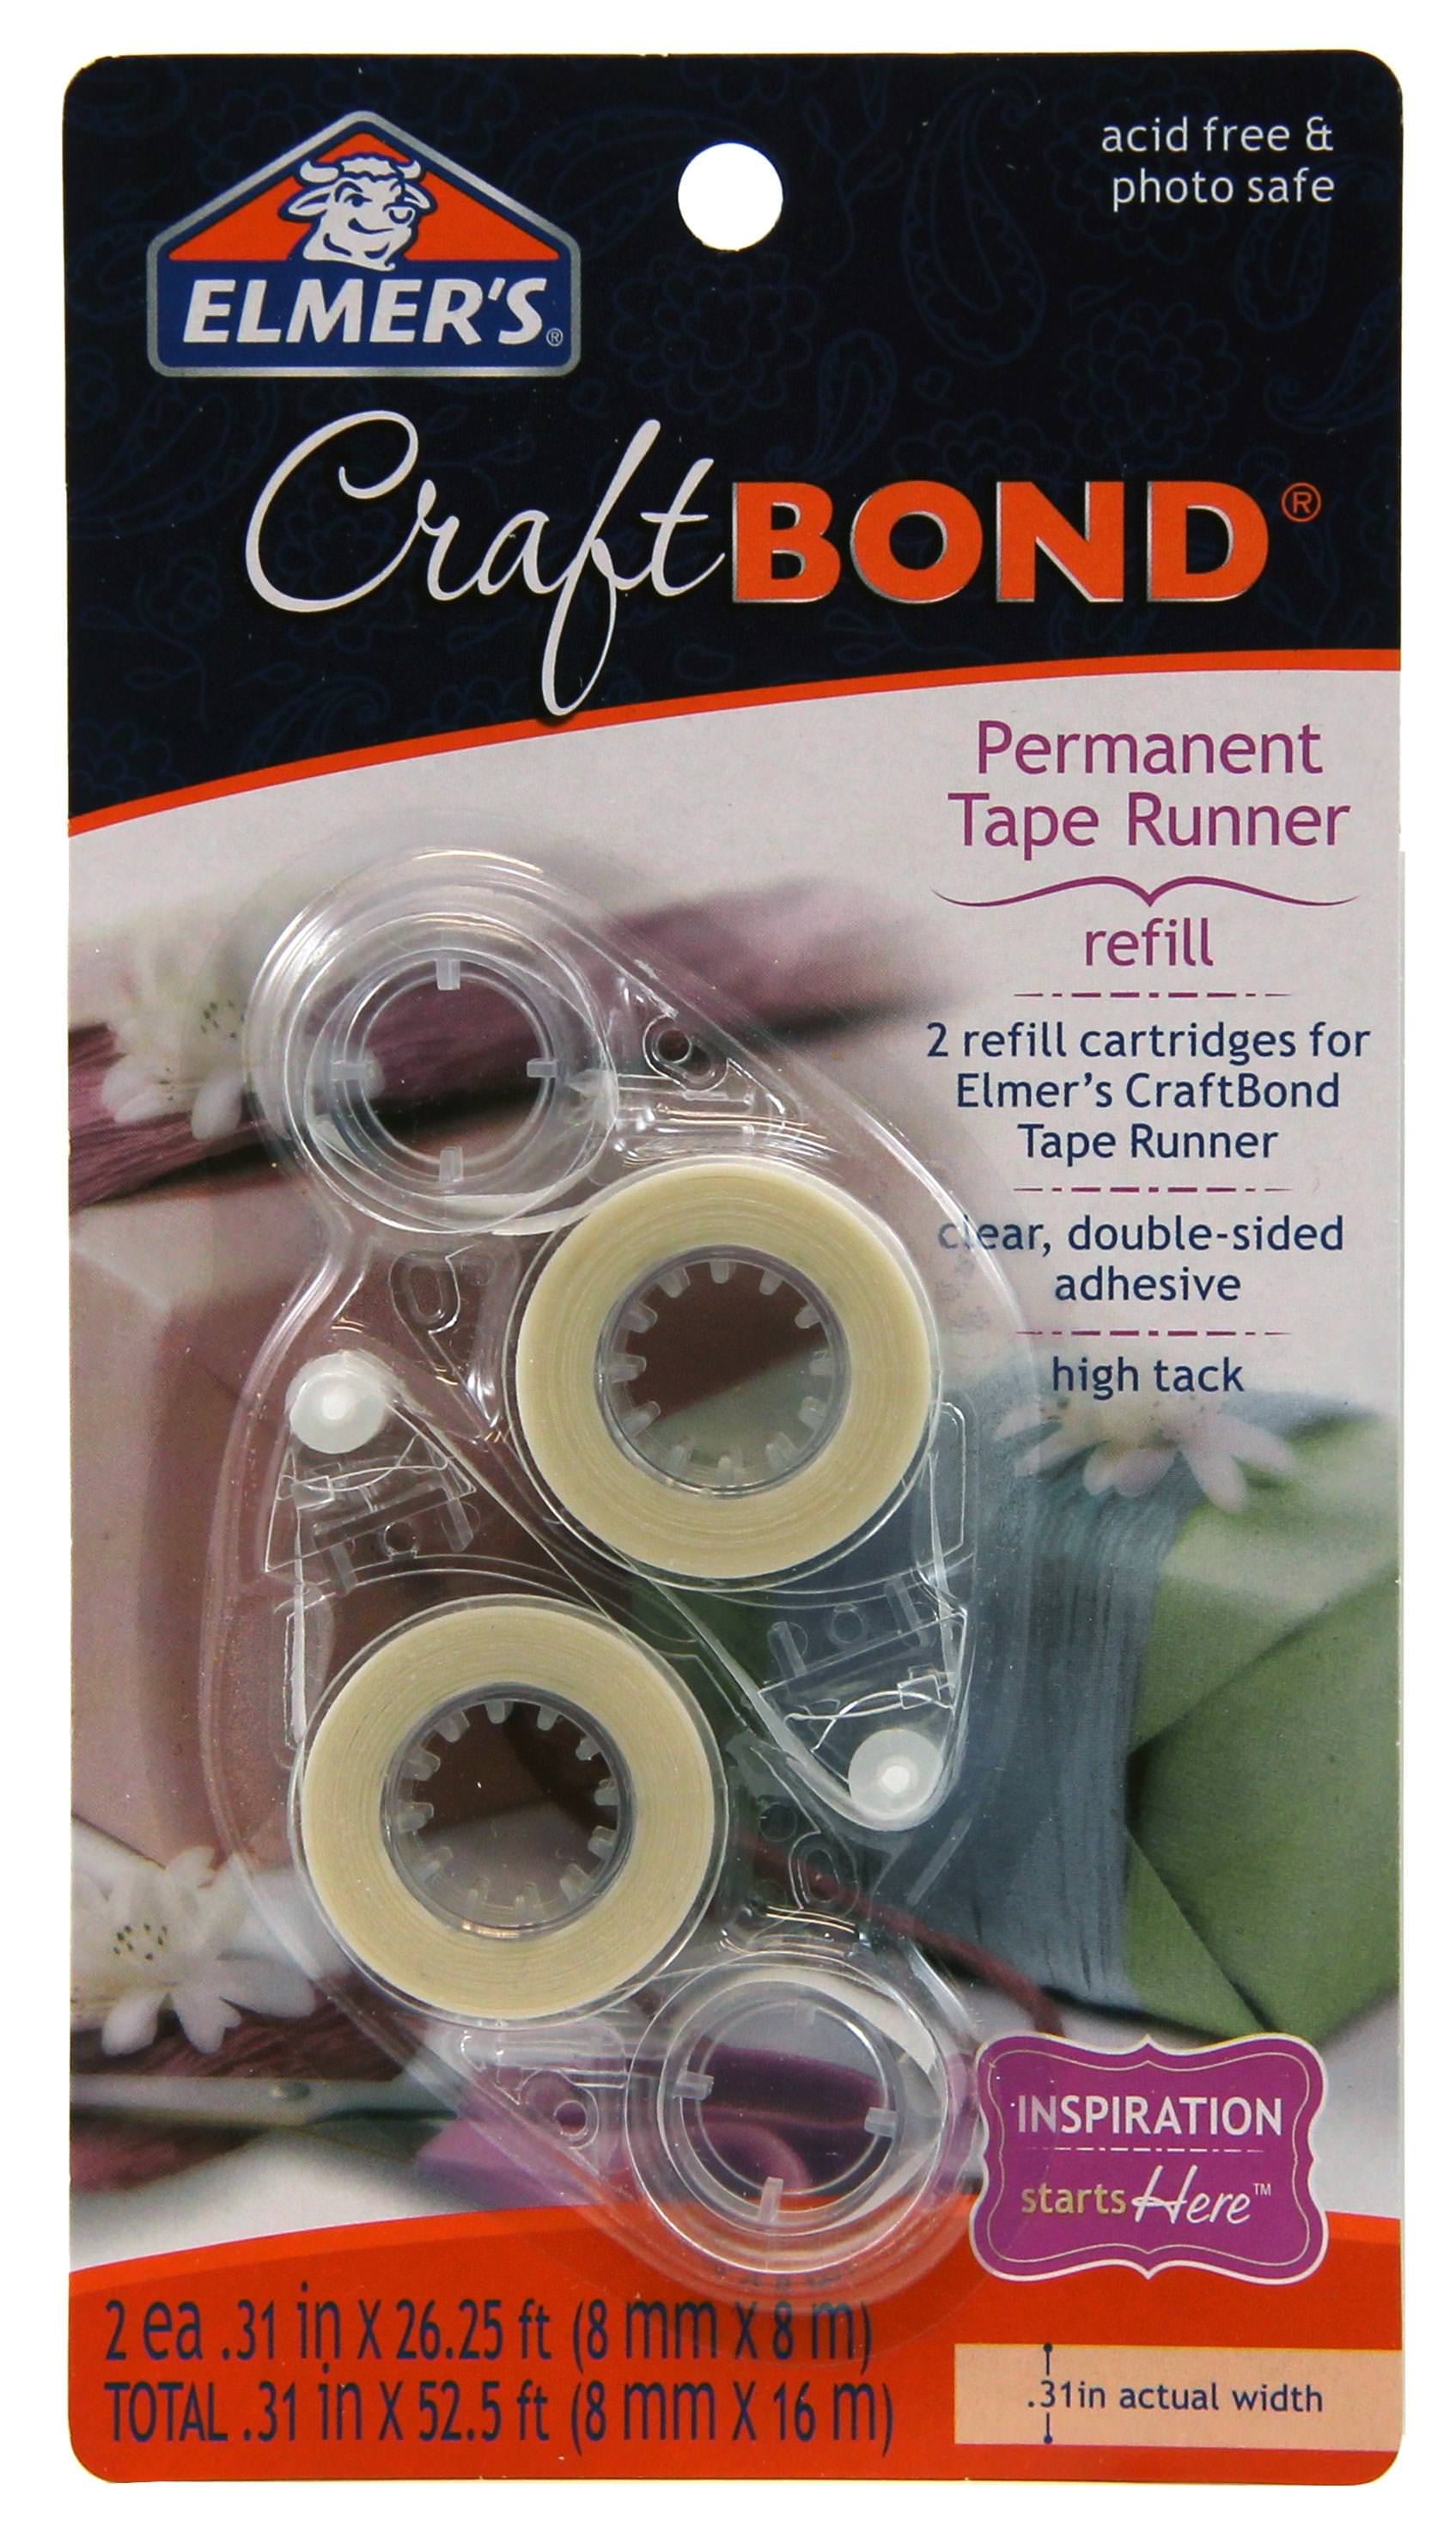 Elmer's CraftBond Permanent Tape Runner Refills